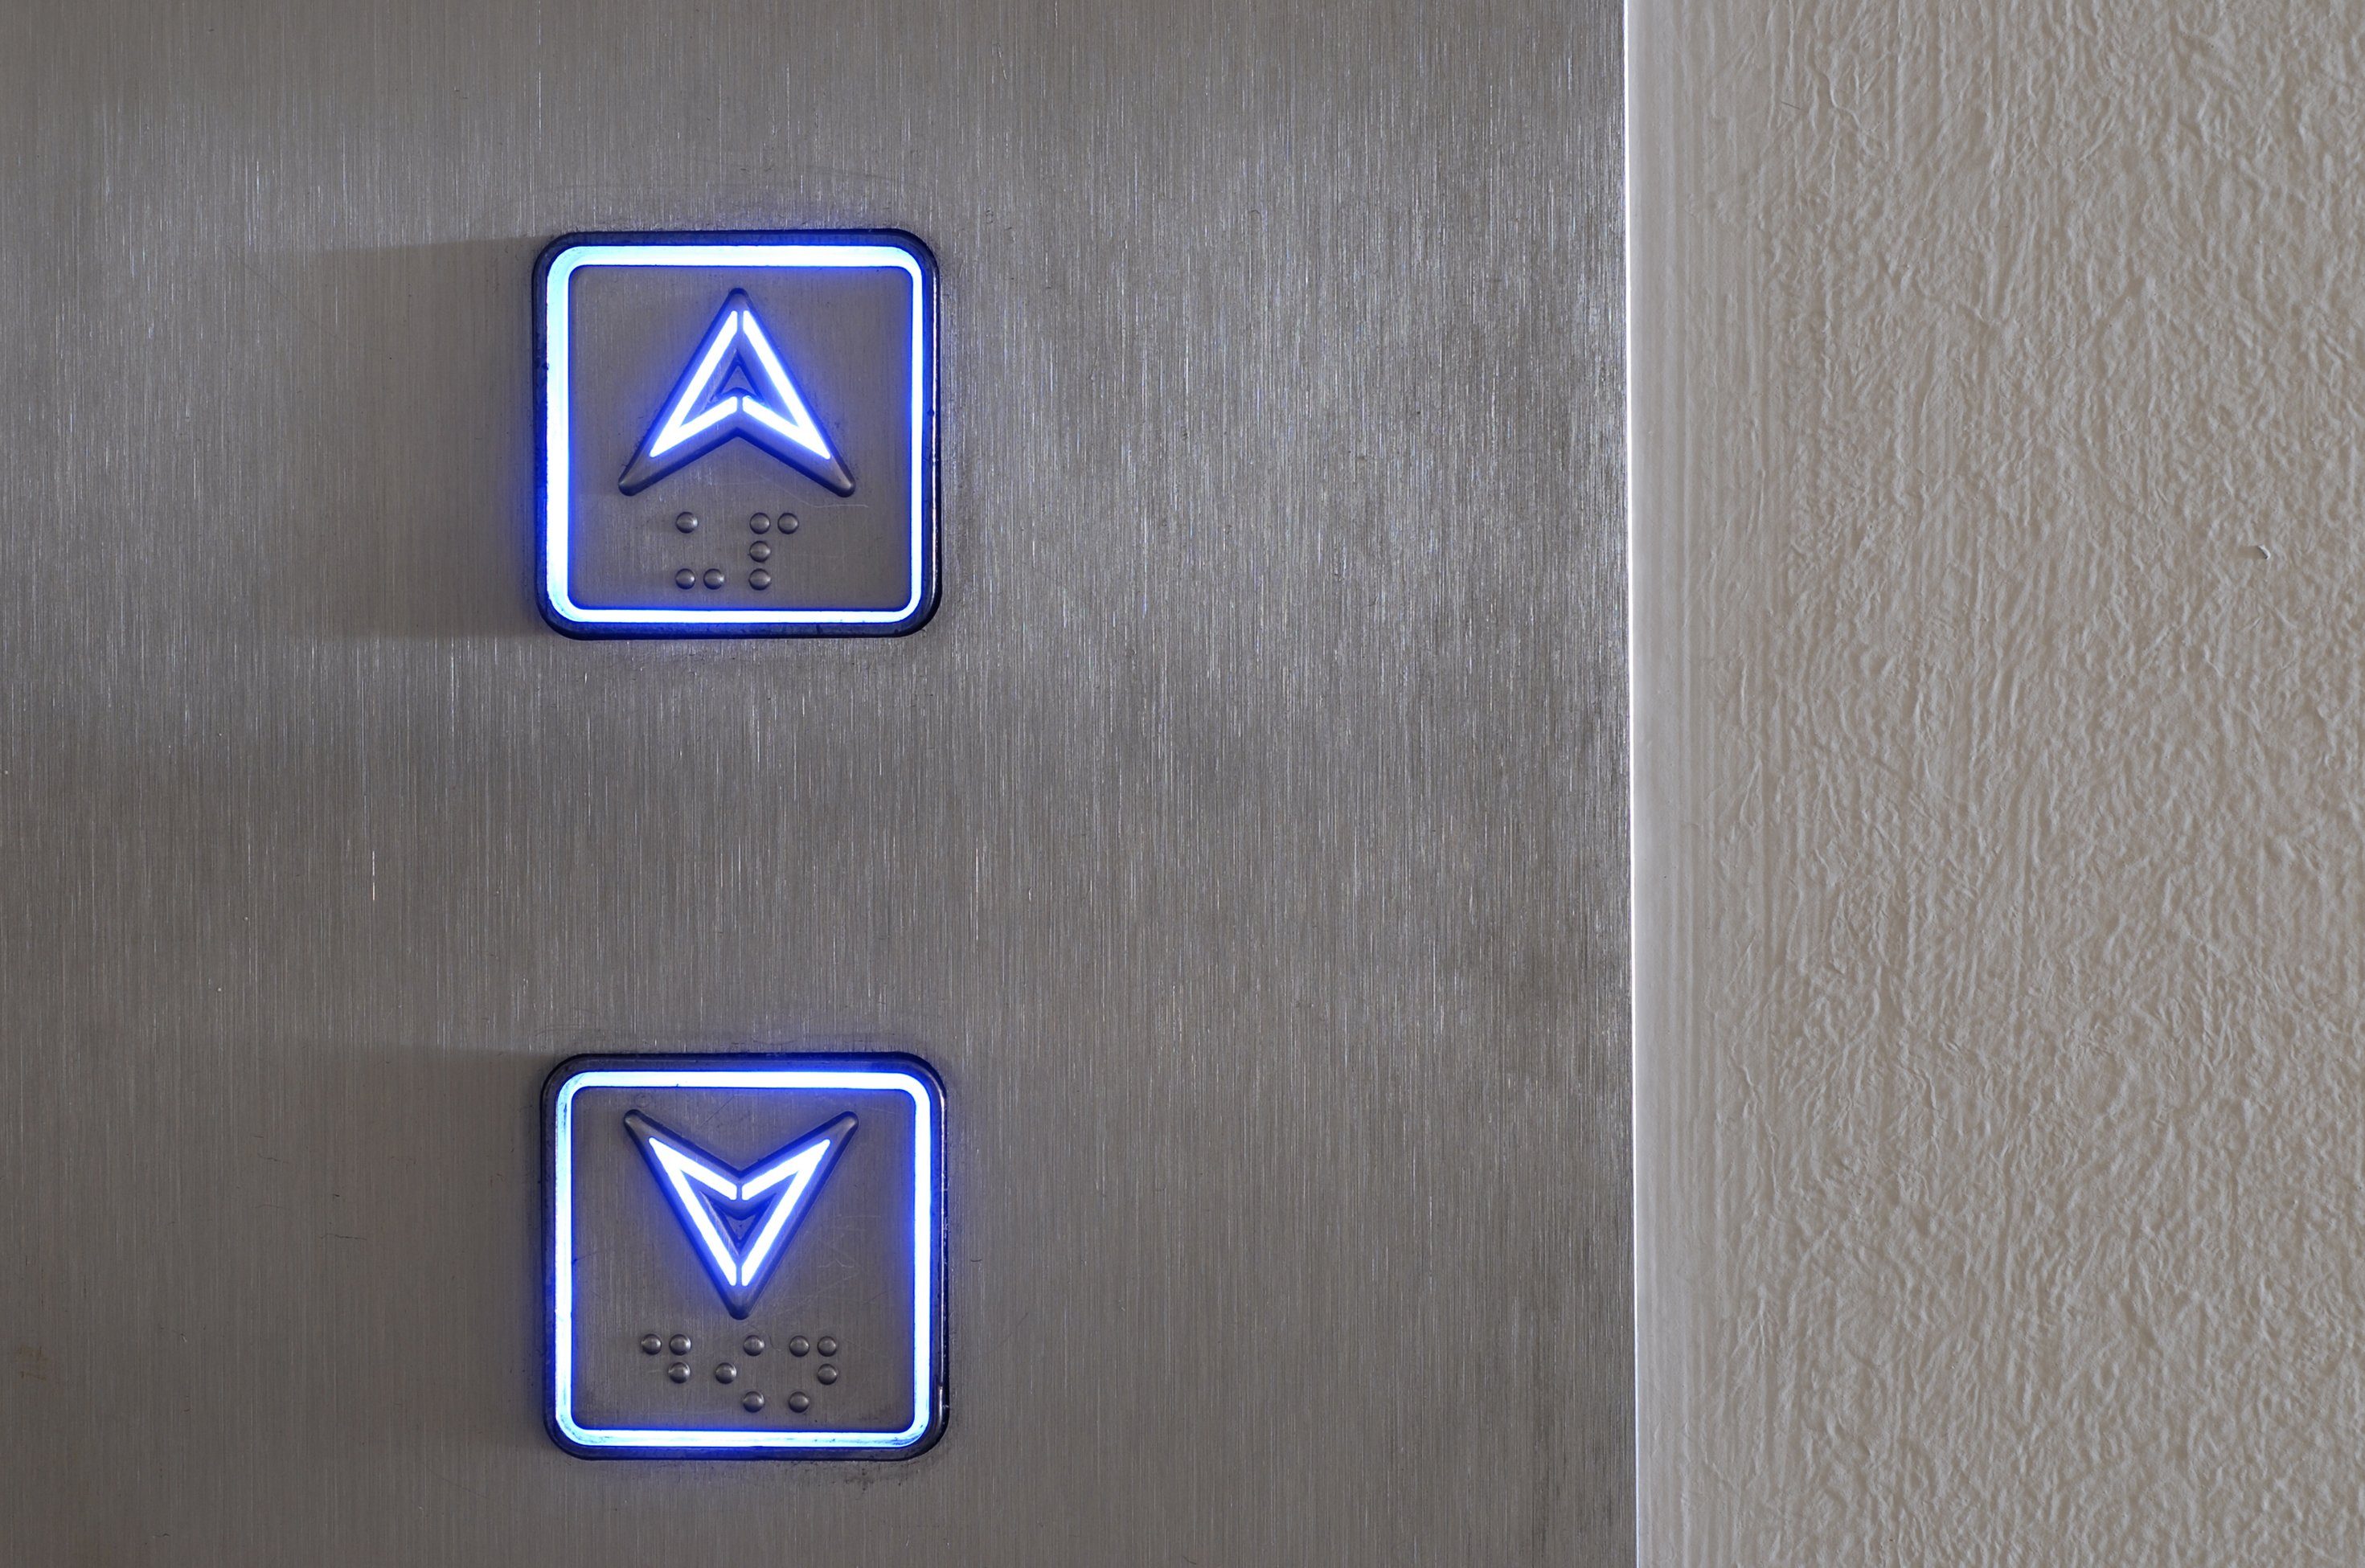 Neon elevator controls